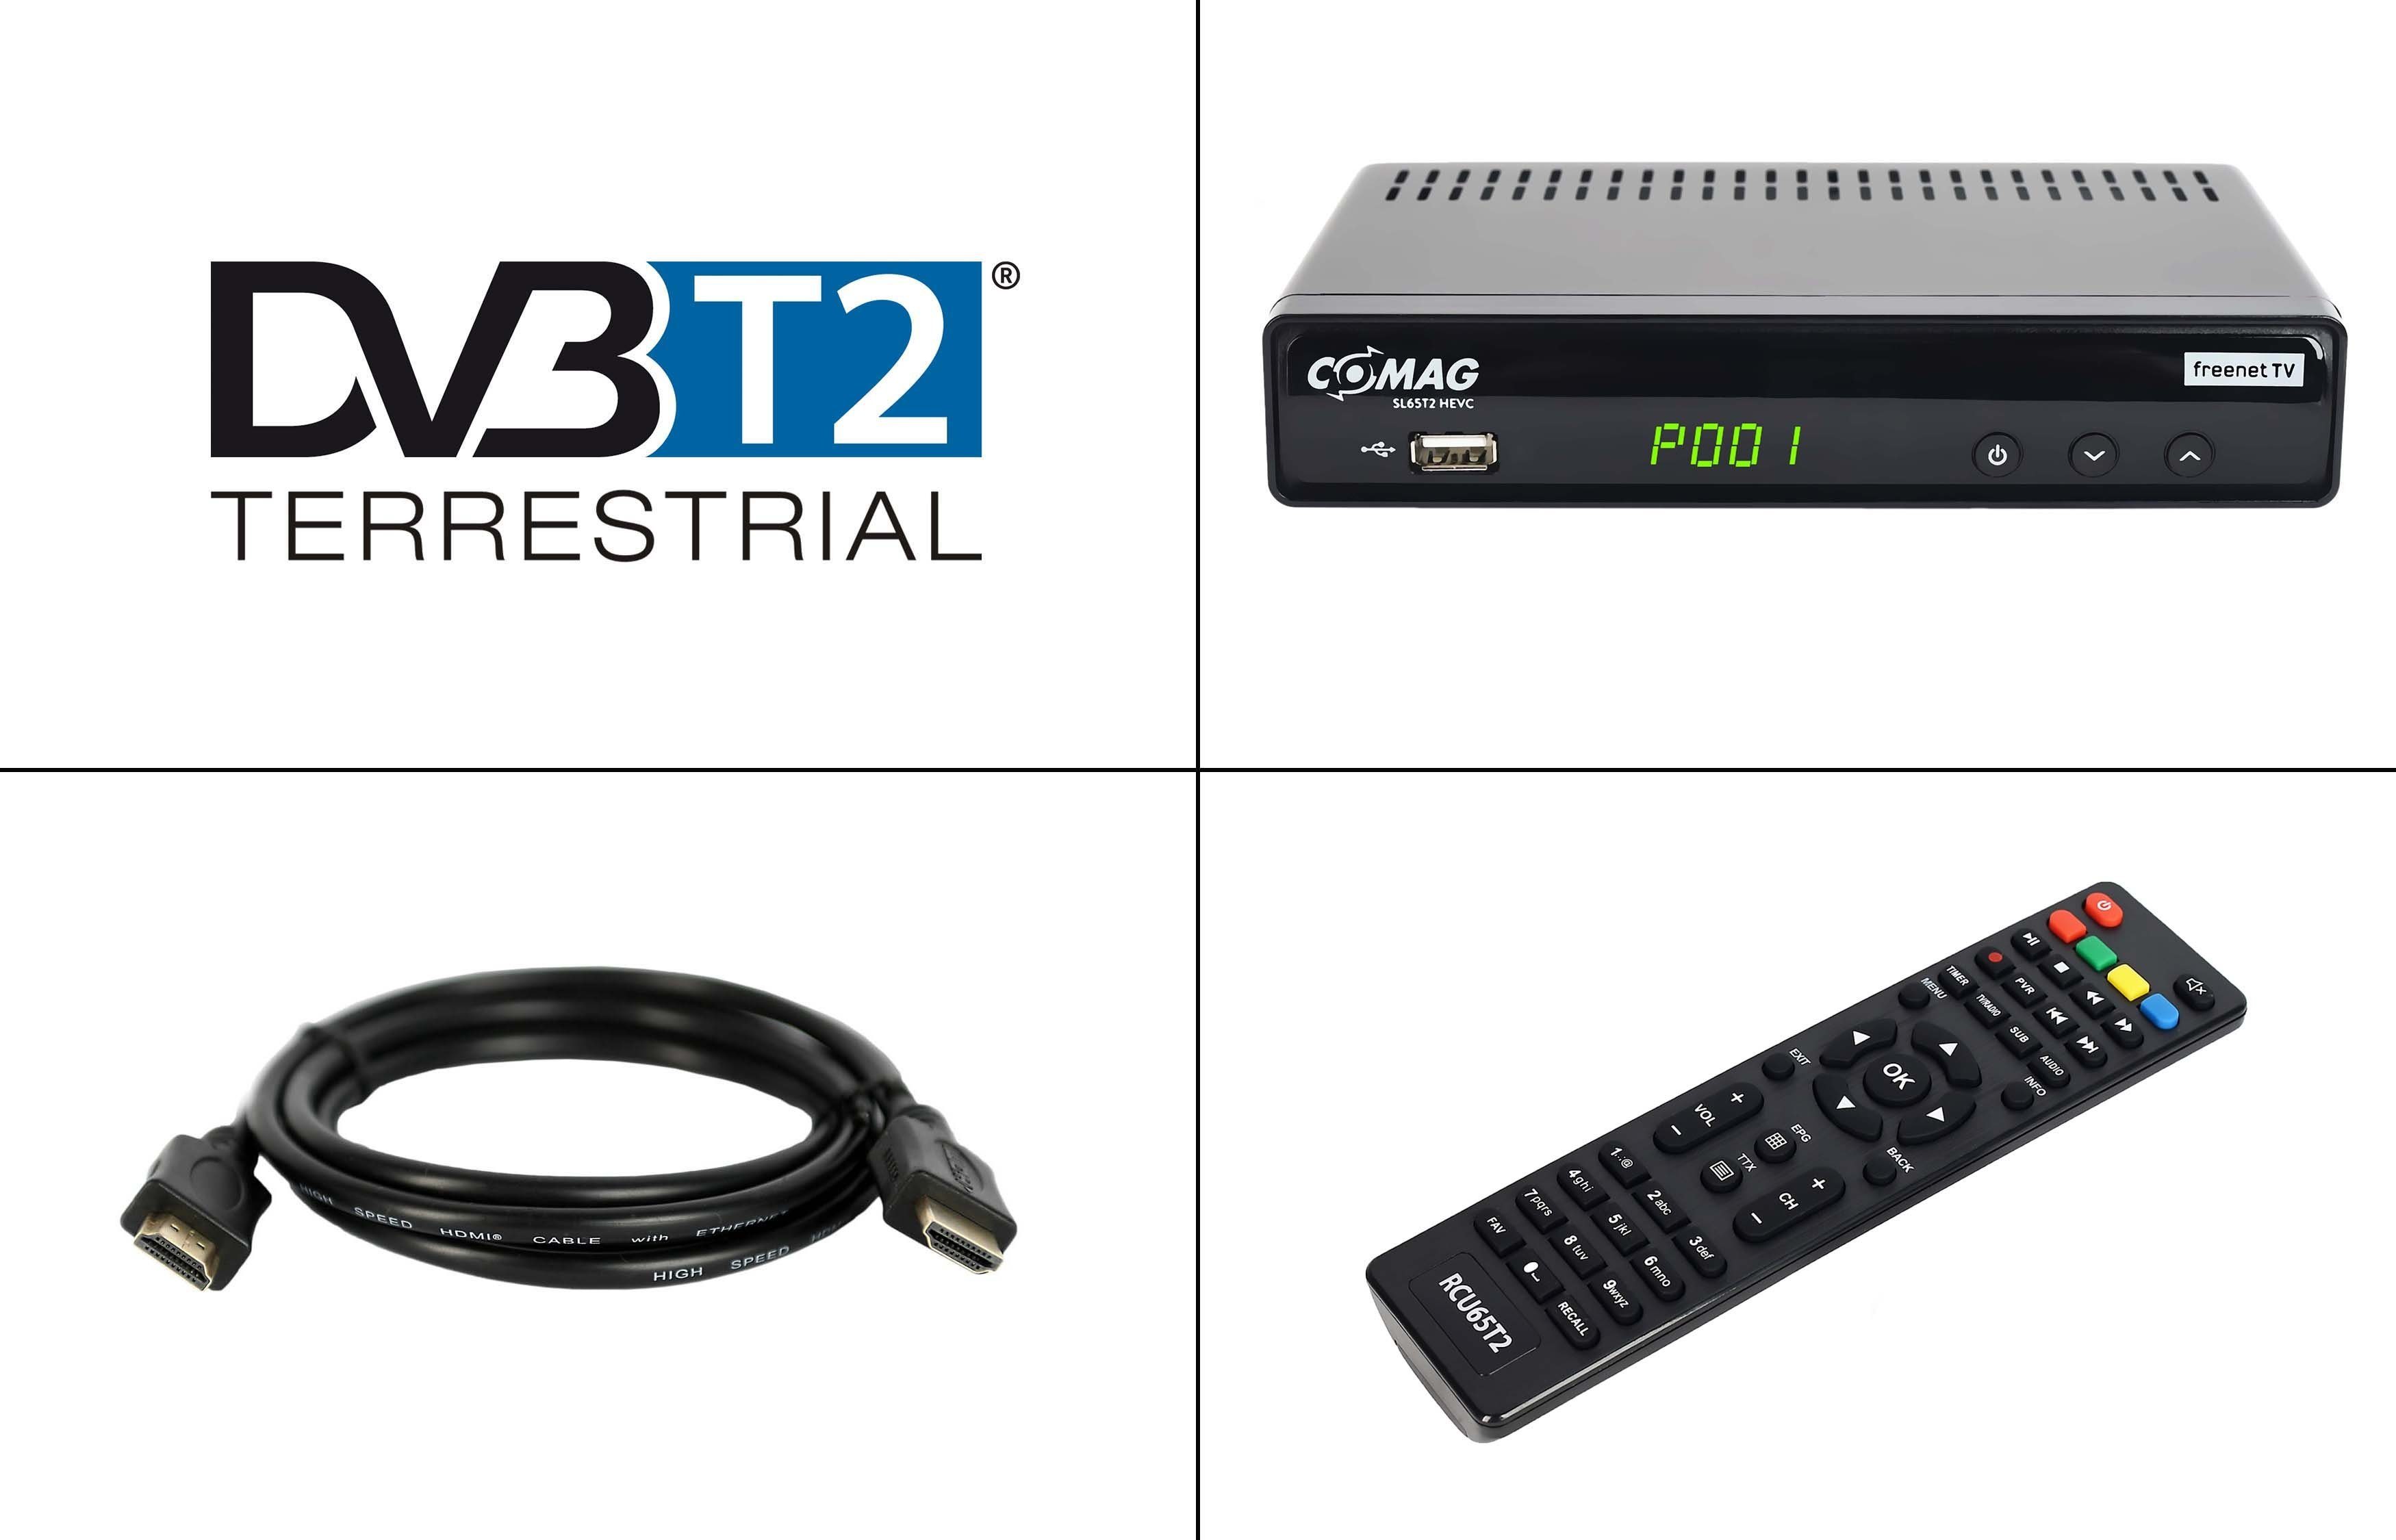 PVR HD Kabel, freenet HD Comag Player, TV, (2m HDMI Media SL65T2 Full-HD) Receiver ready, DVB-T2 Full